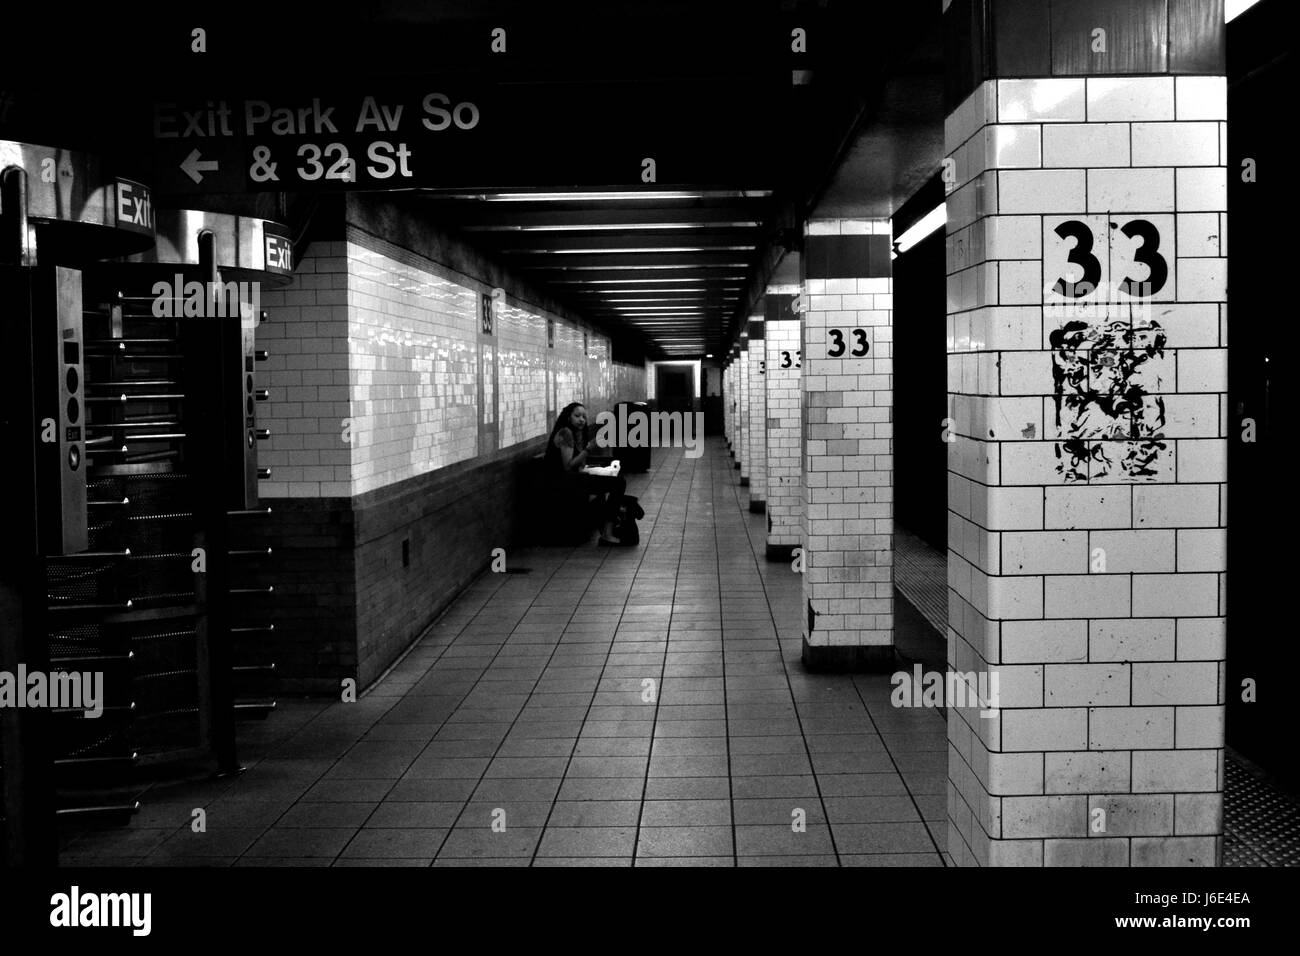 New York city subway station on 32th st Stock Photo